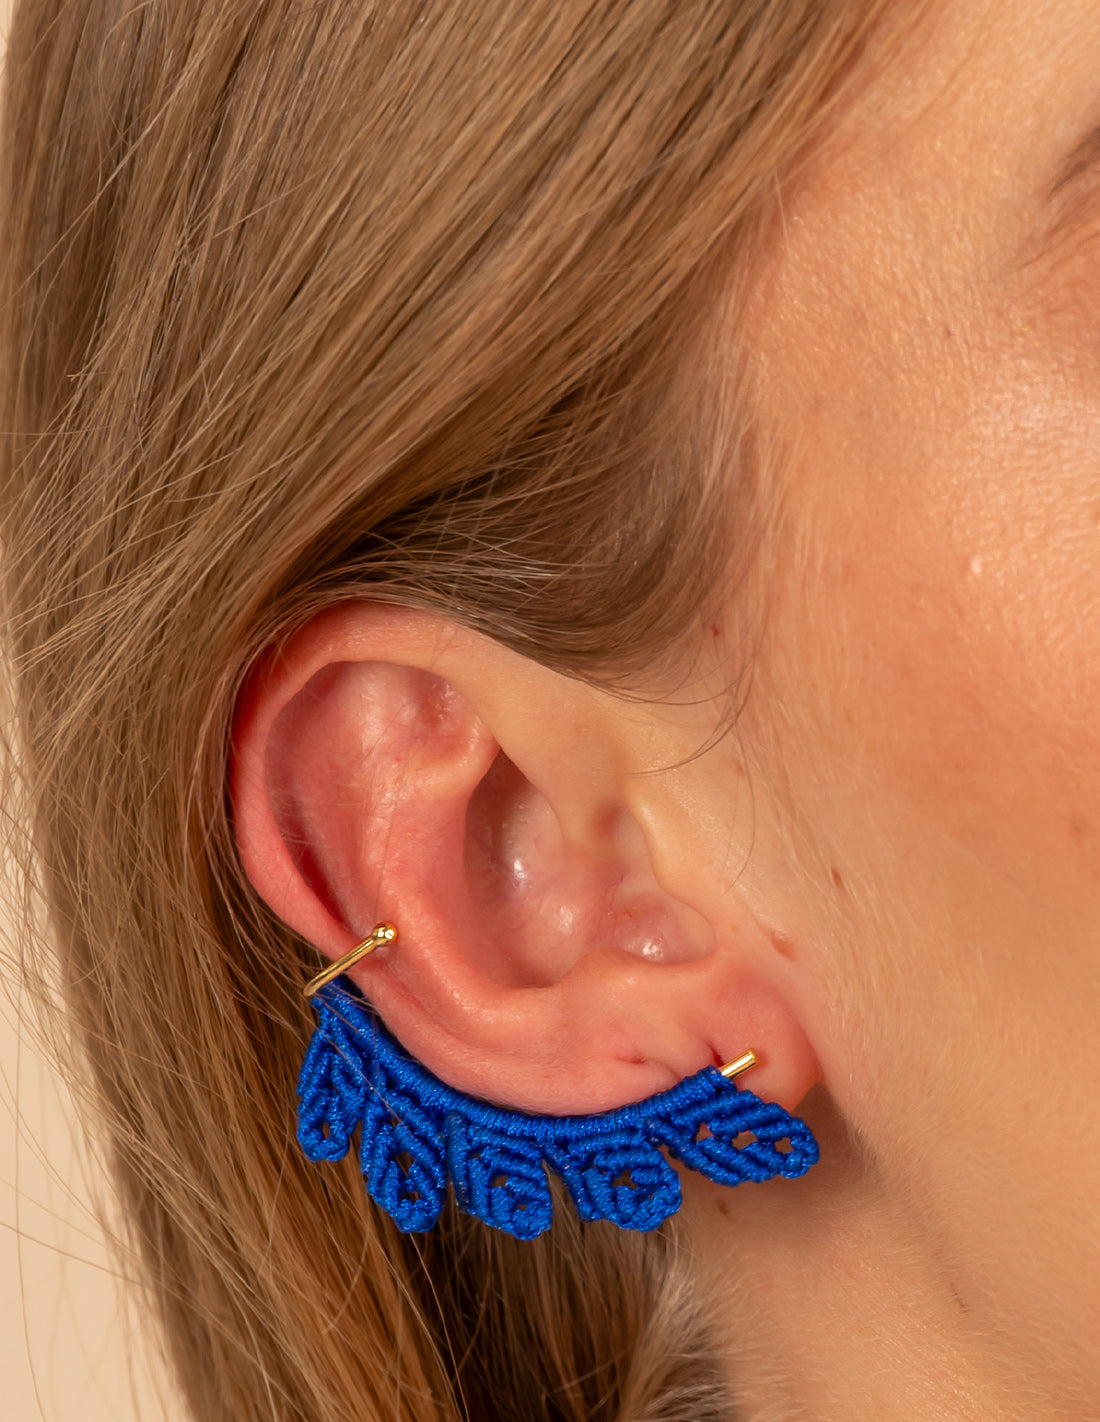 Regal Ear Cuff Blue King. Hand-Dyed Ear Cuff With Hand Woven Macramé In Blue King. Entreaguas